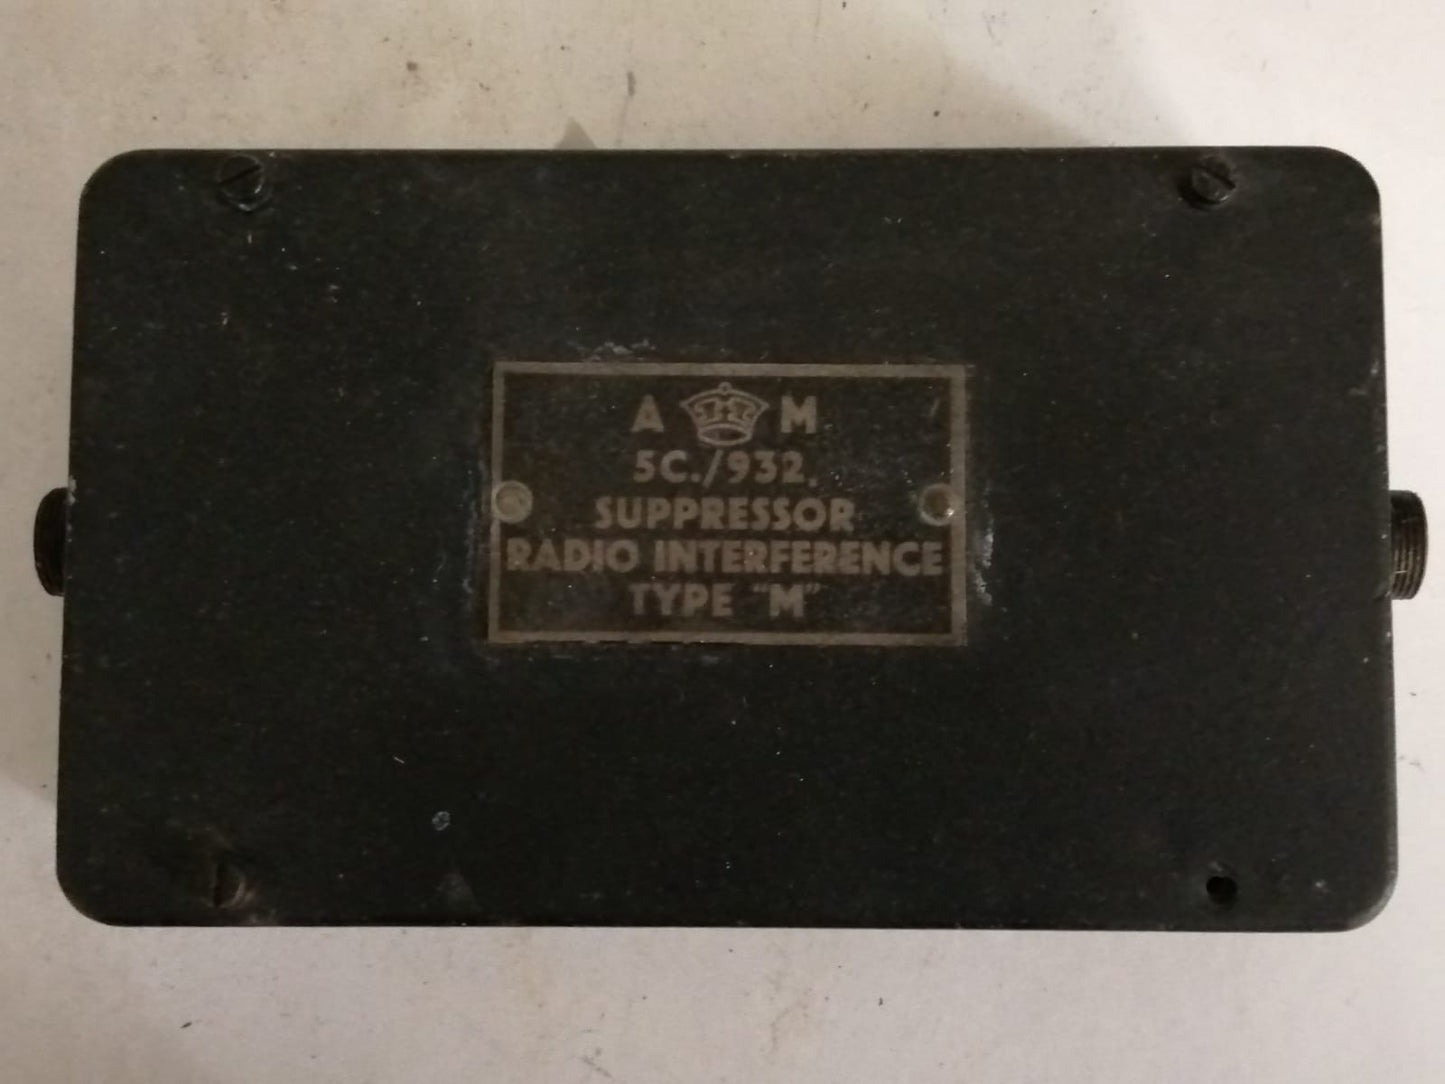 Aircraft Radio suppression unit. Vintage